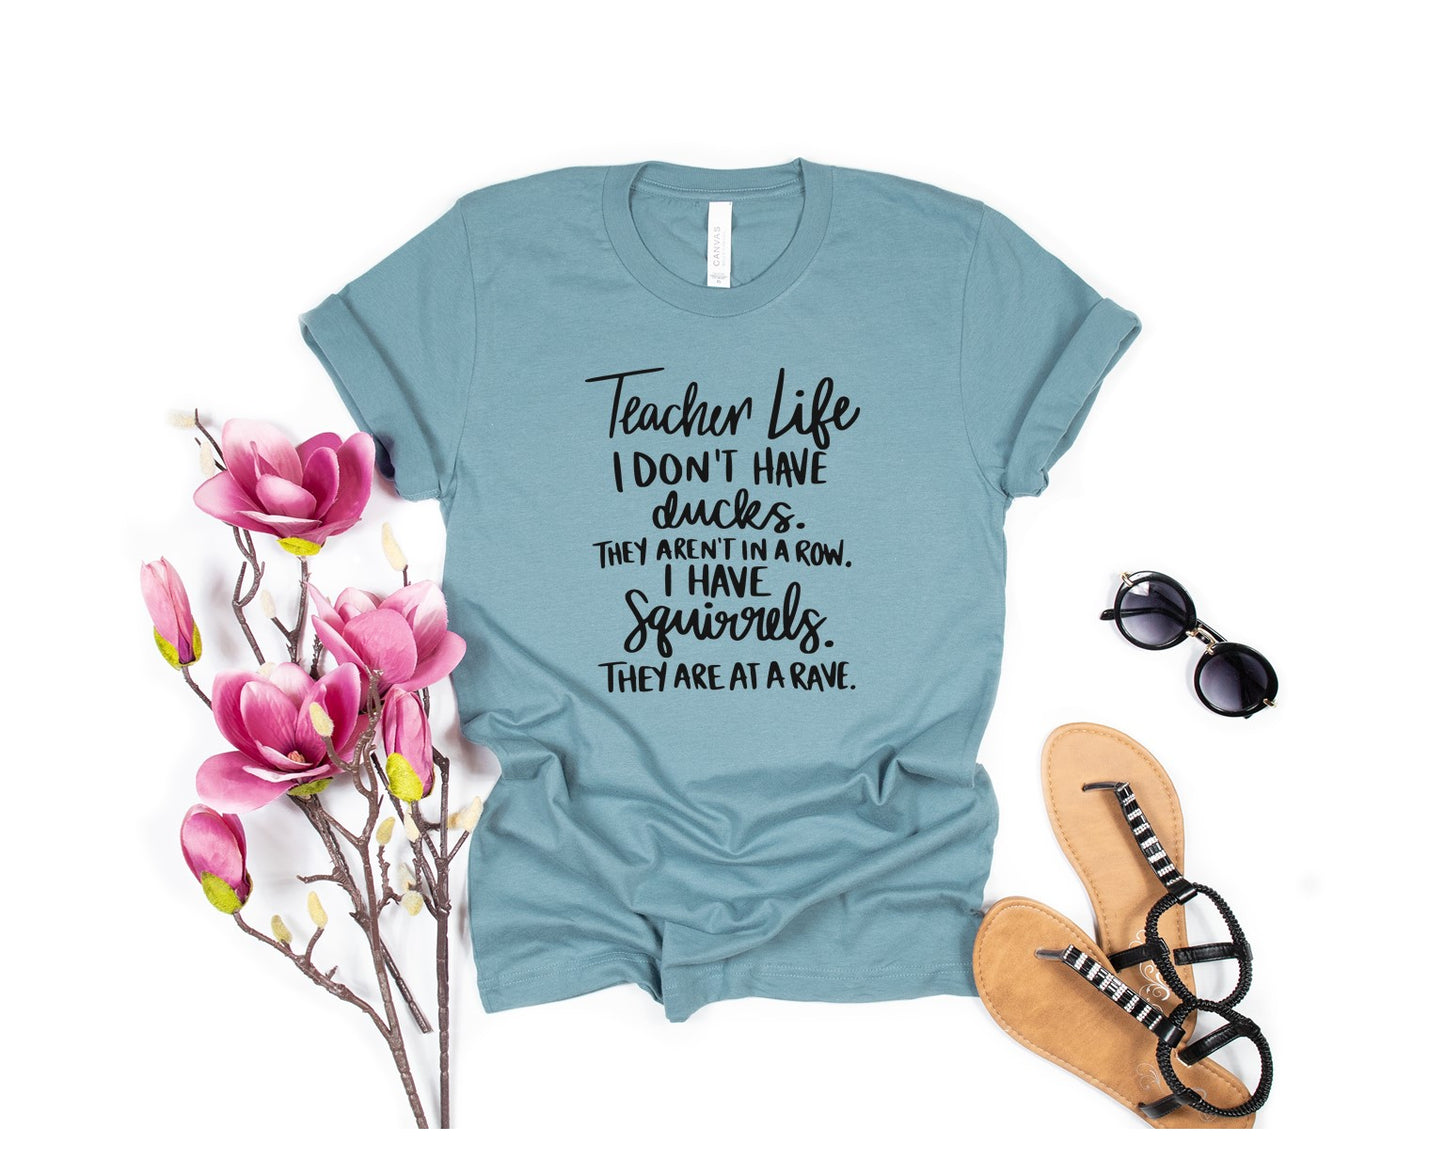 Teacher Life Funny Tshirt